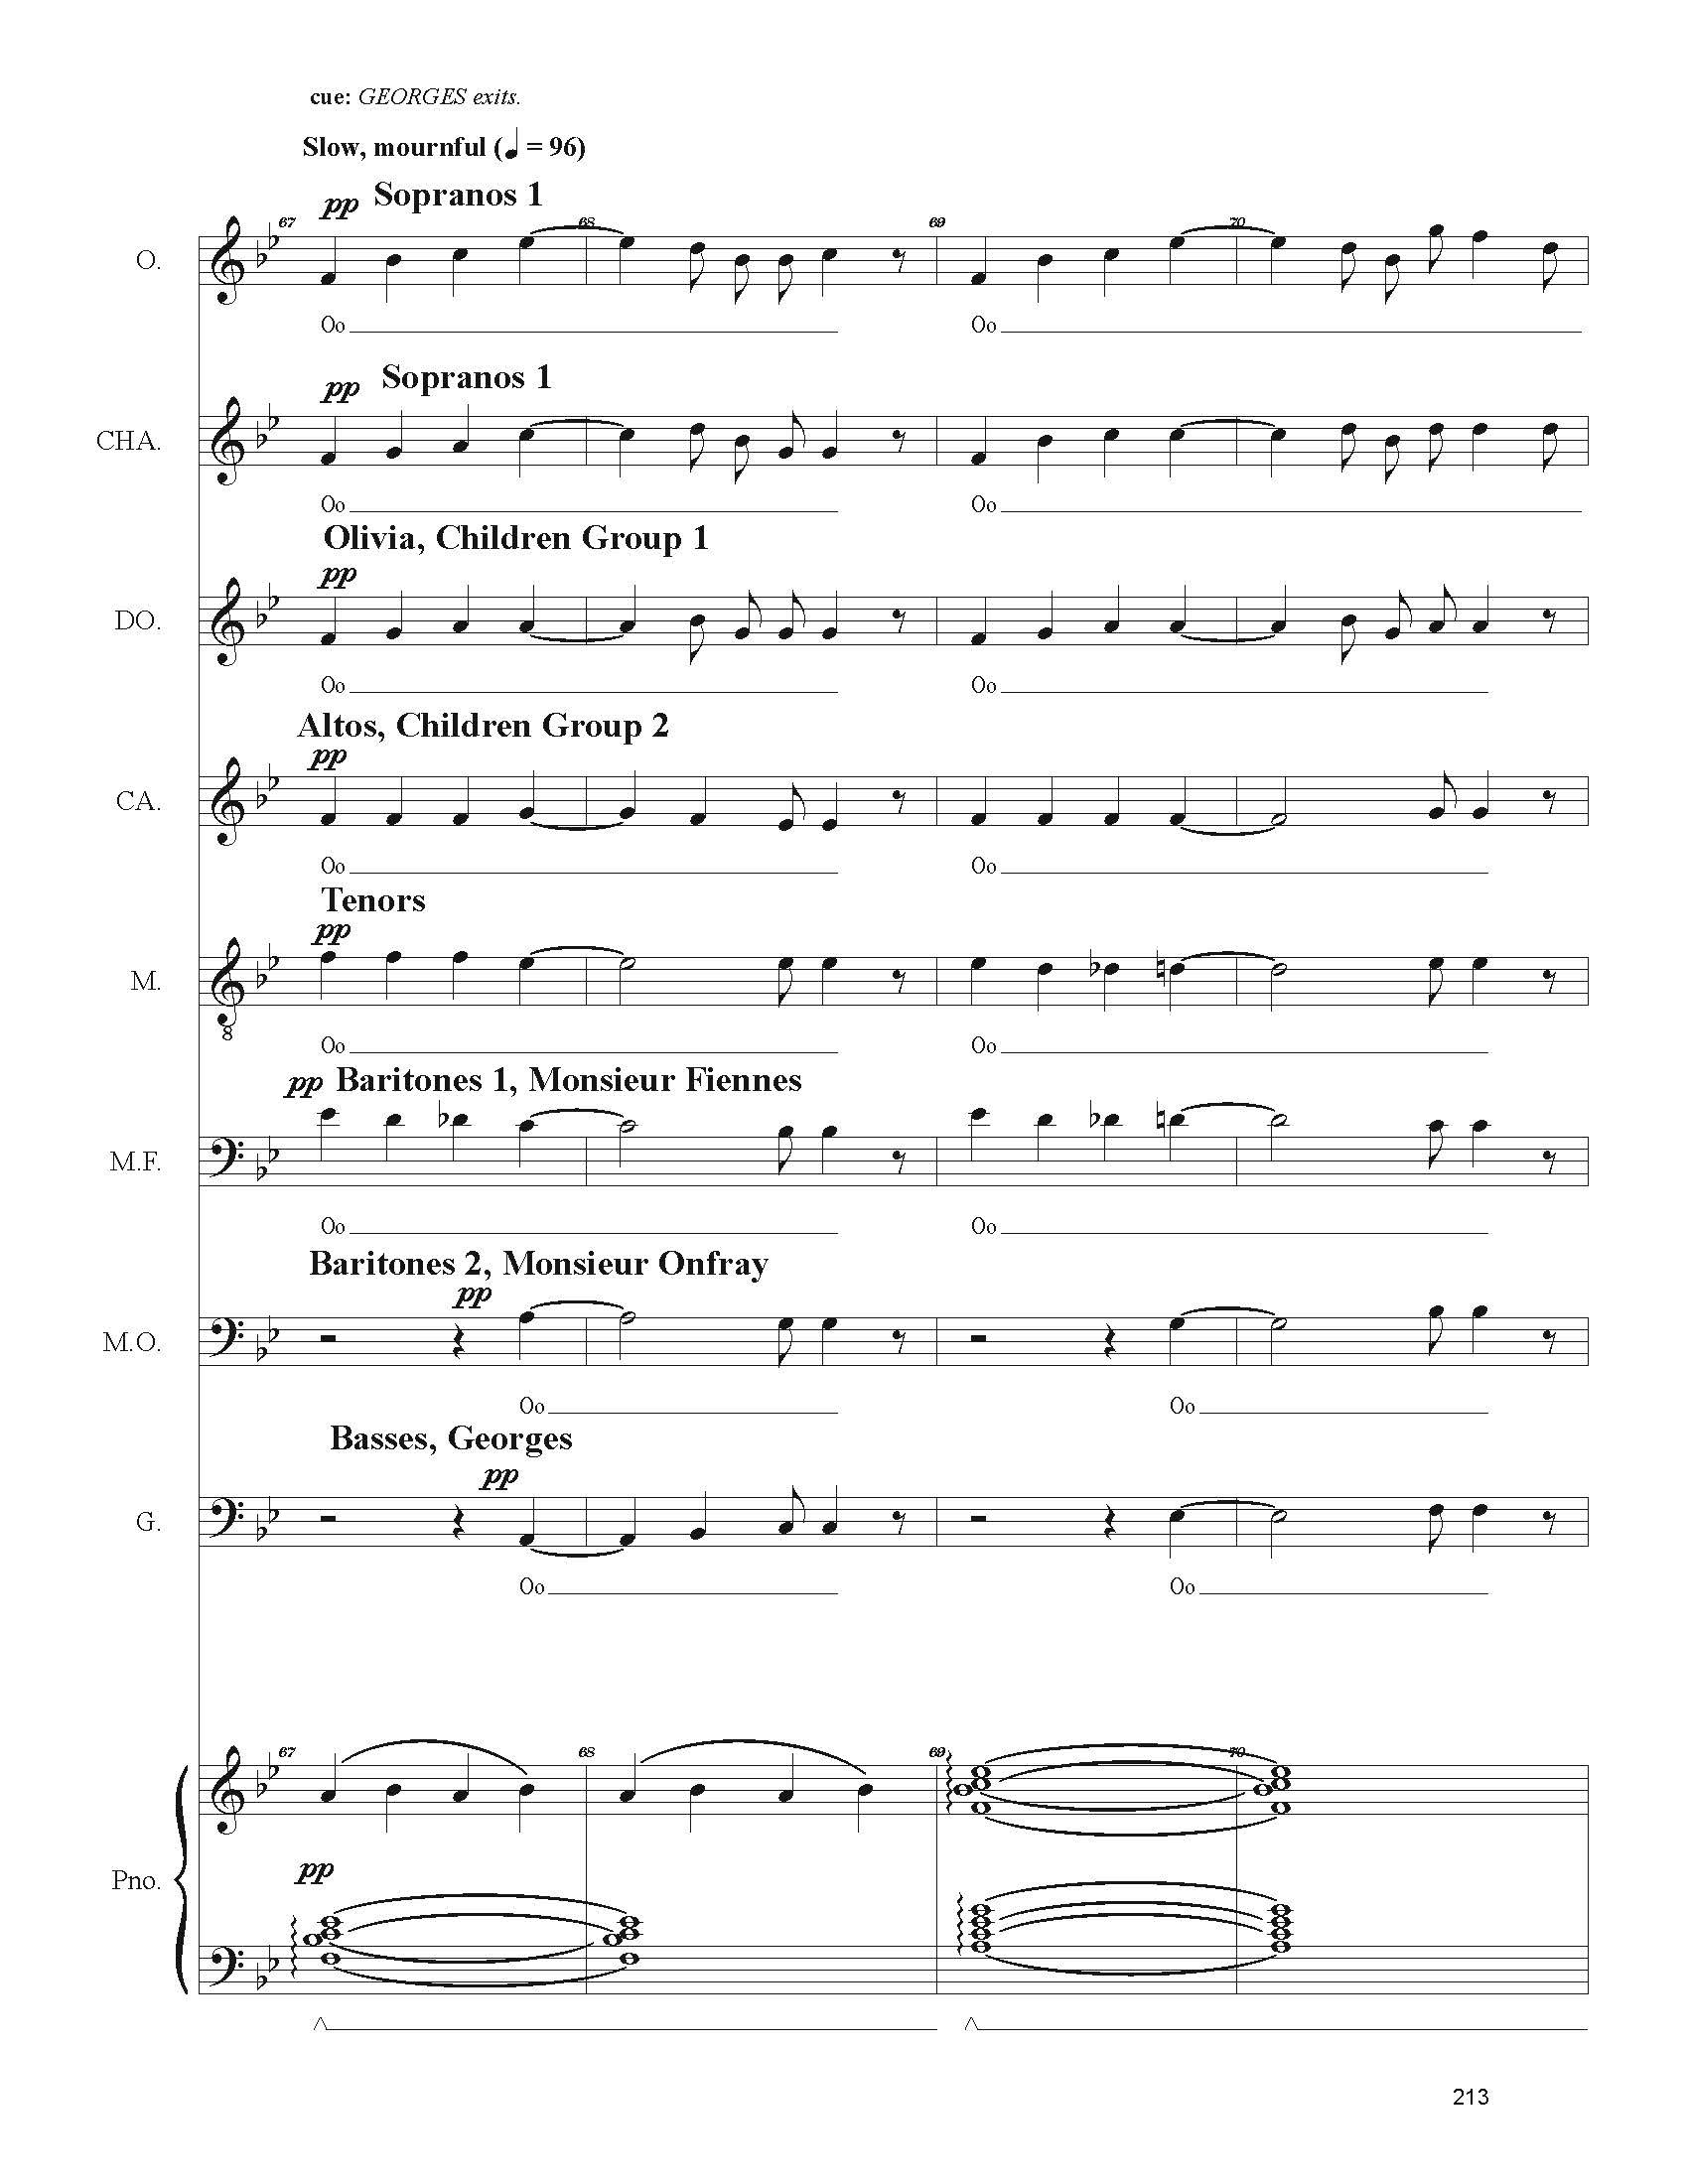 FULL PIANO VOCAL SCORE DRAFT 1 - Score_Page_213.jpg